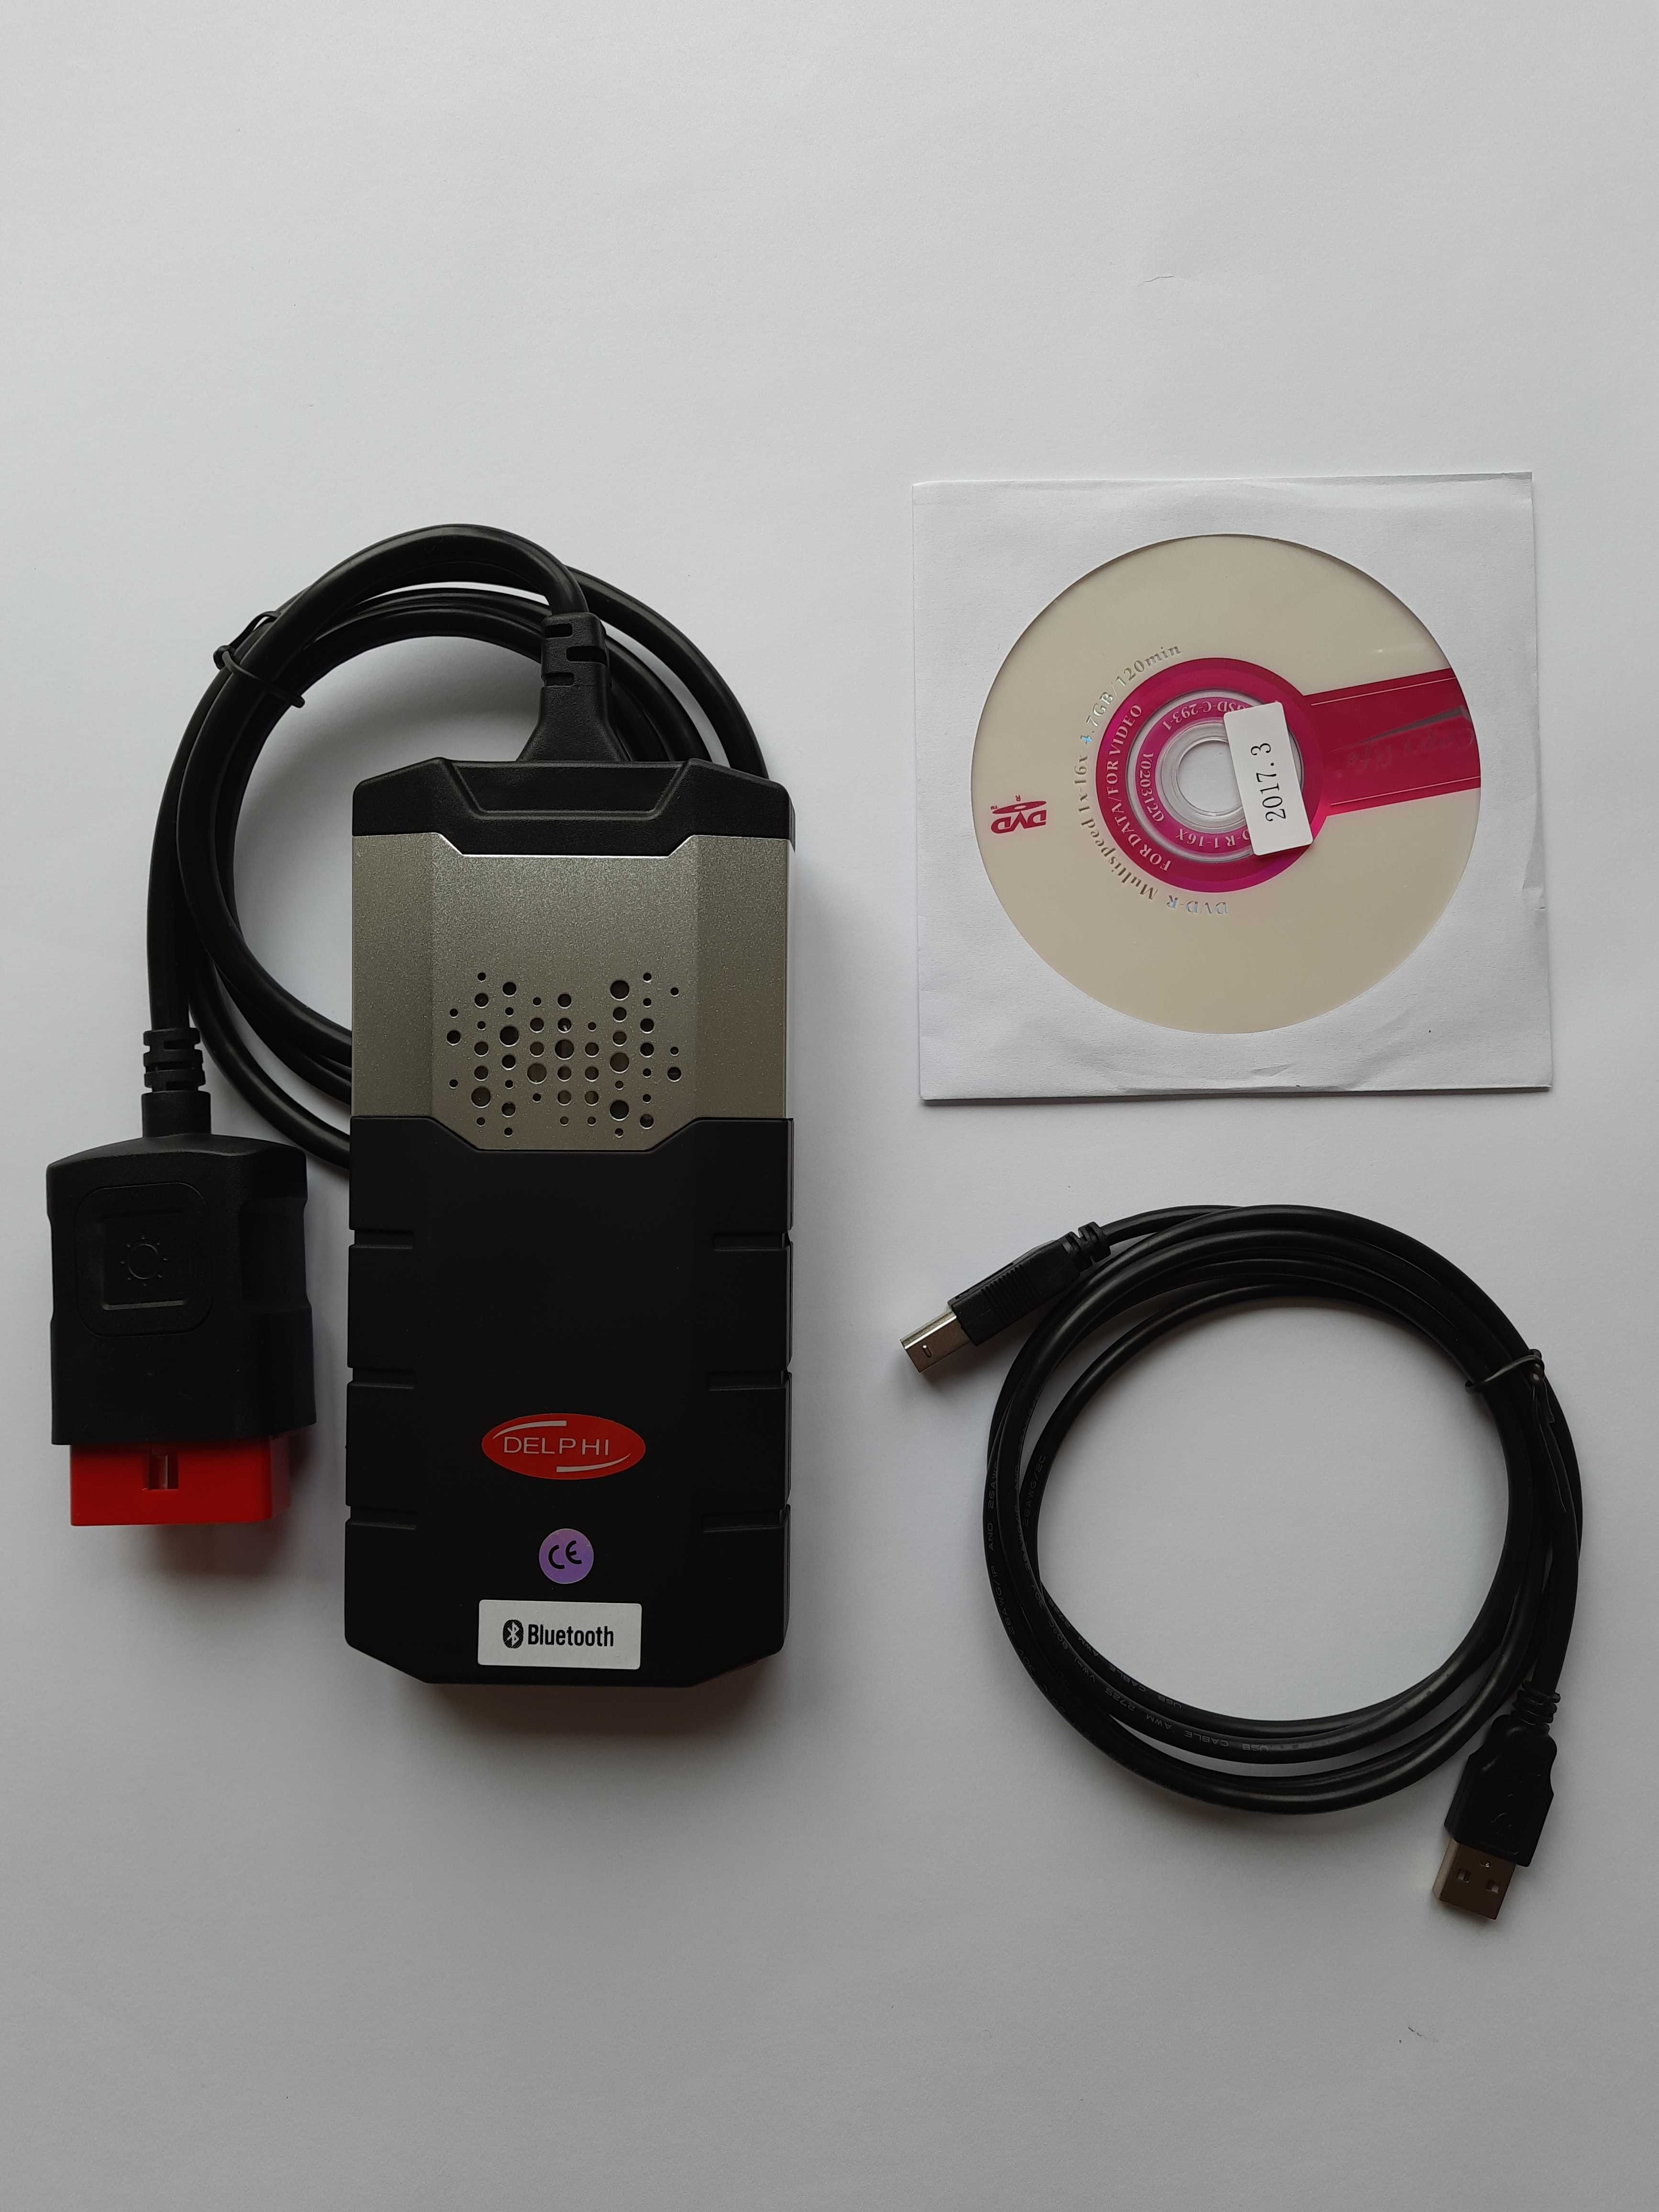 ТОП якість! Мультимарочний автосканер Delphi 150e (AutoCom)+Bluetooth!